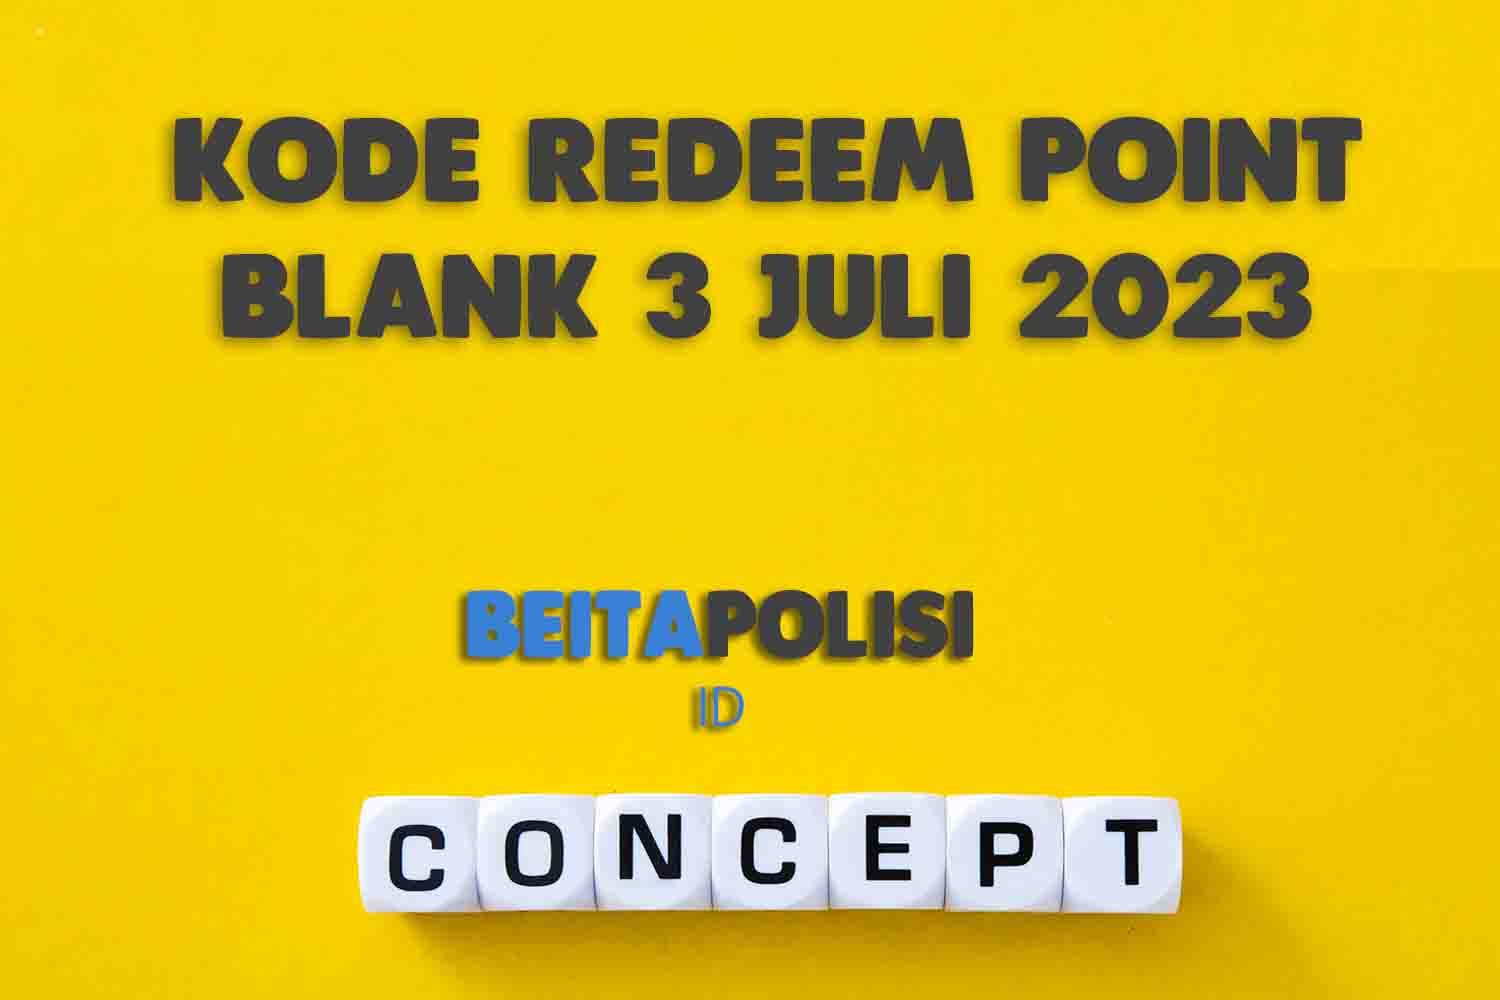 Kode Redeem Point Blank 3 Juli 2023 Terbaru